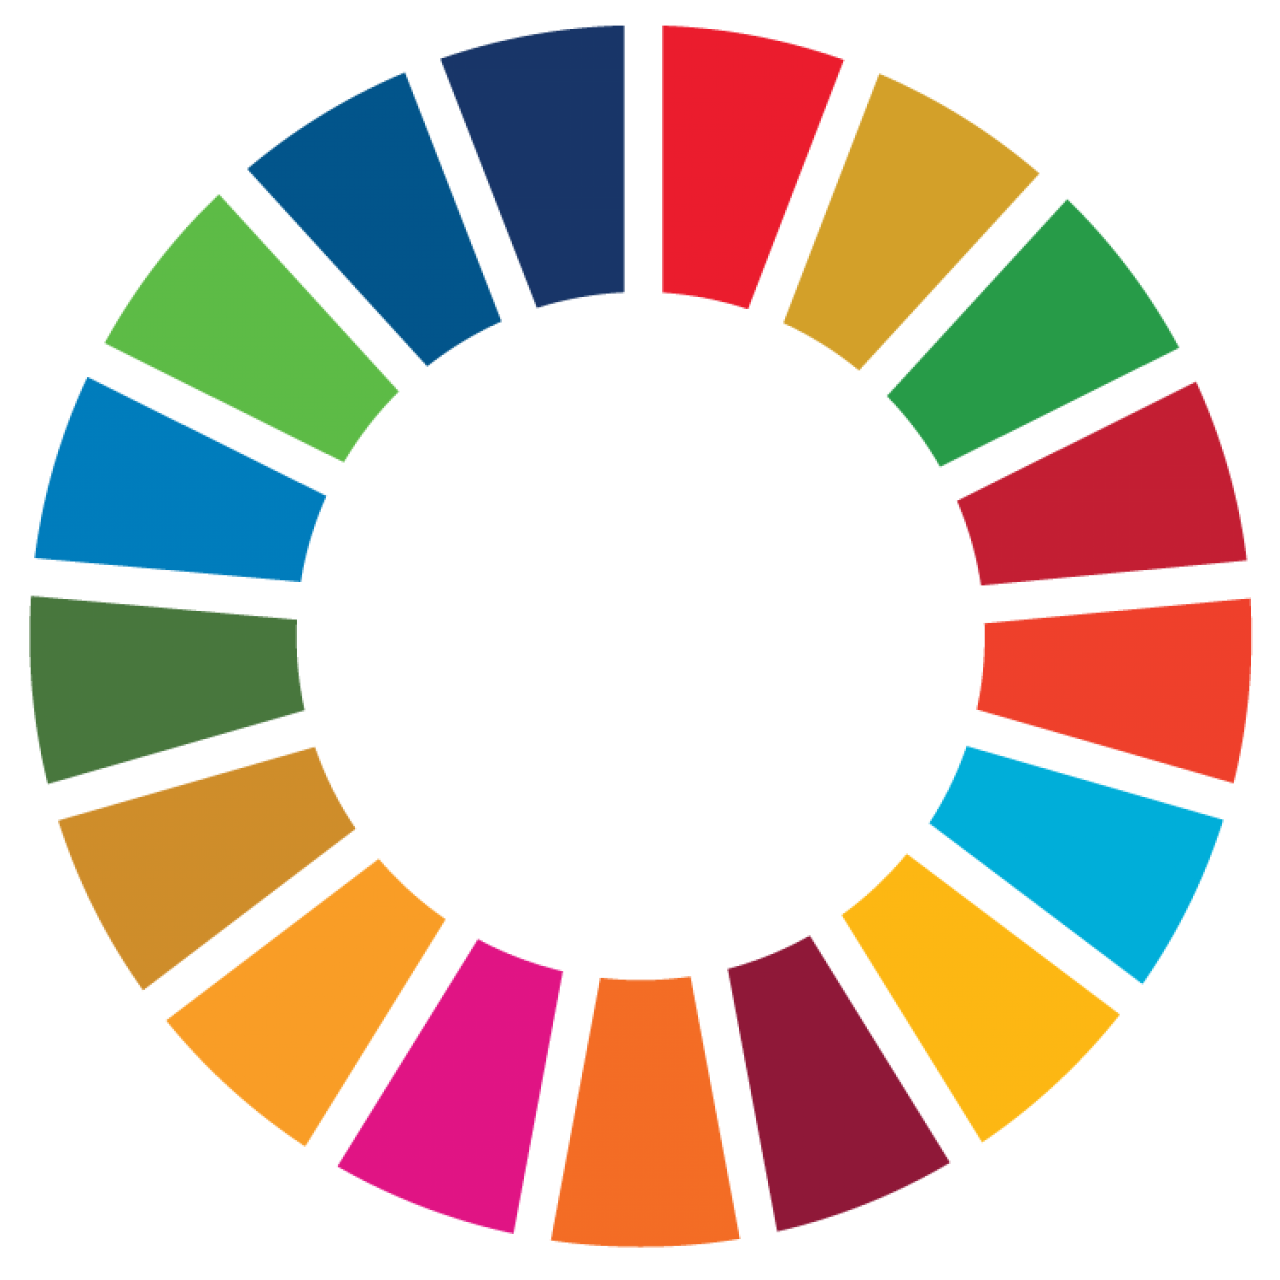 Graphic of a multicolor segmented "Sustainability Wheel"